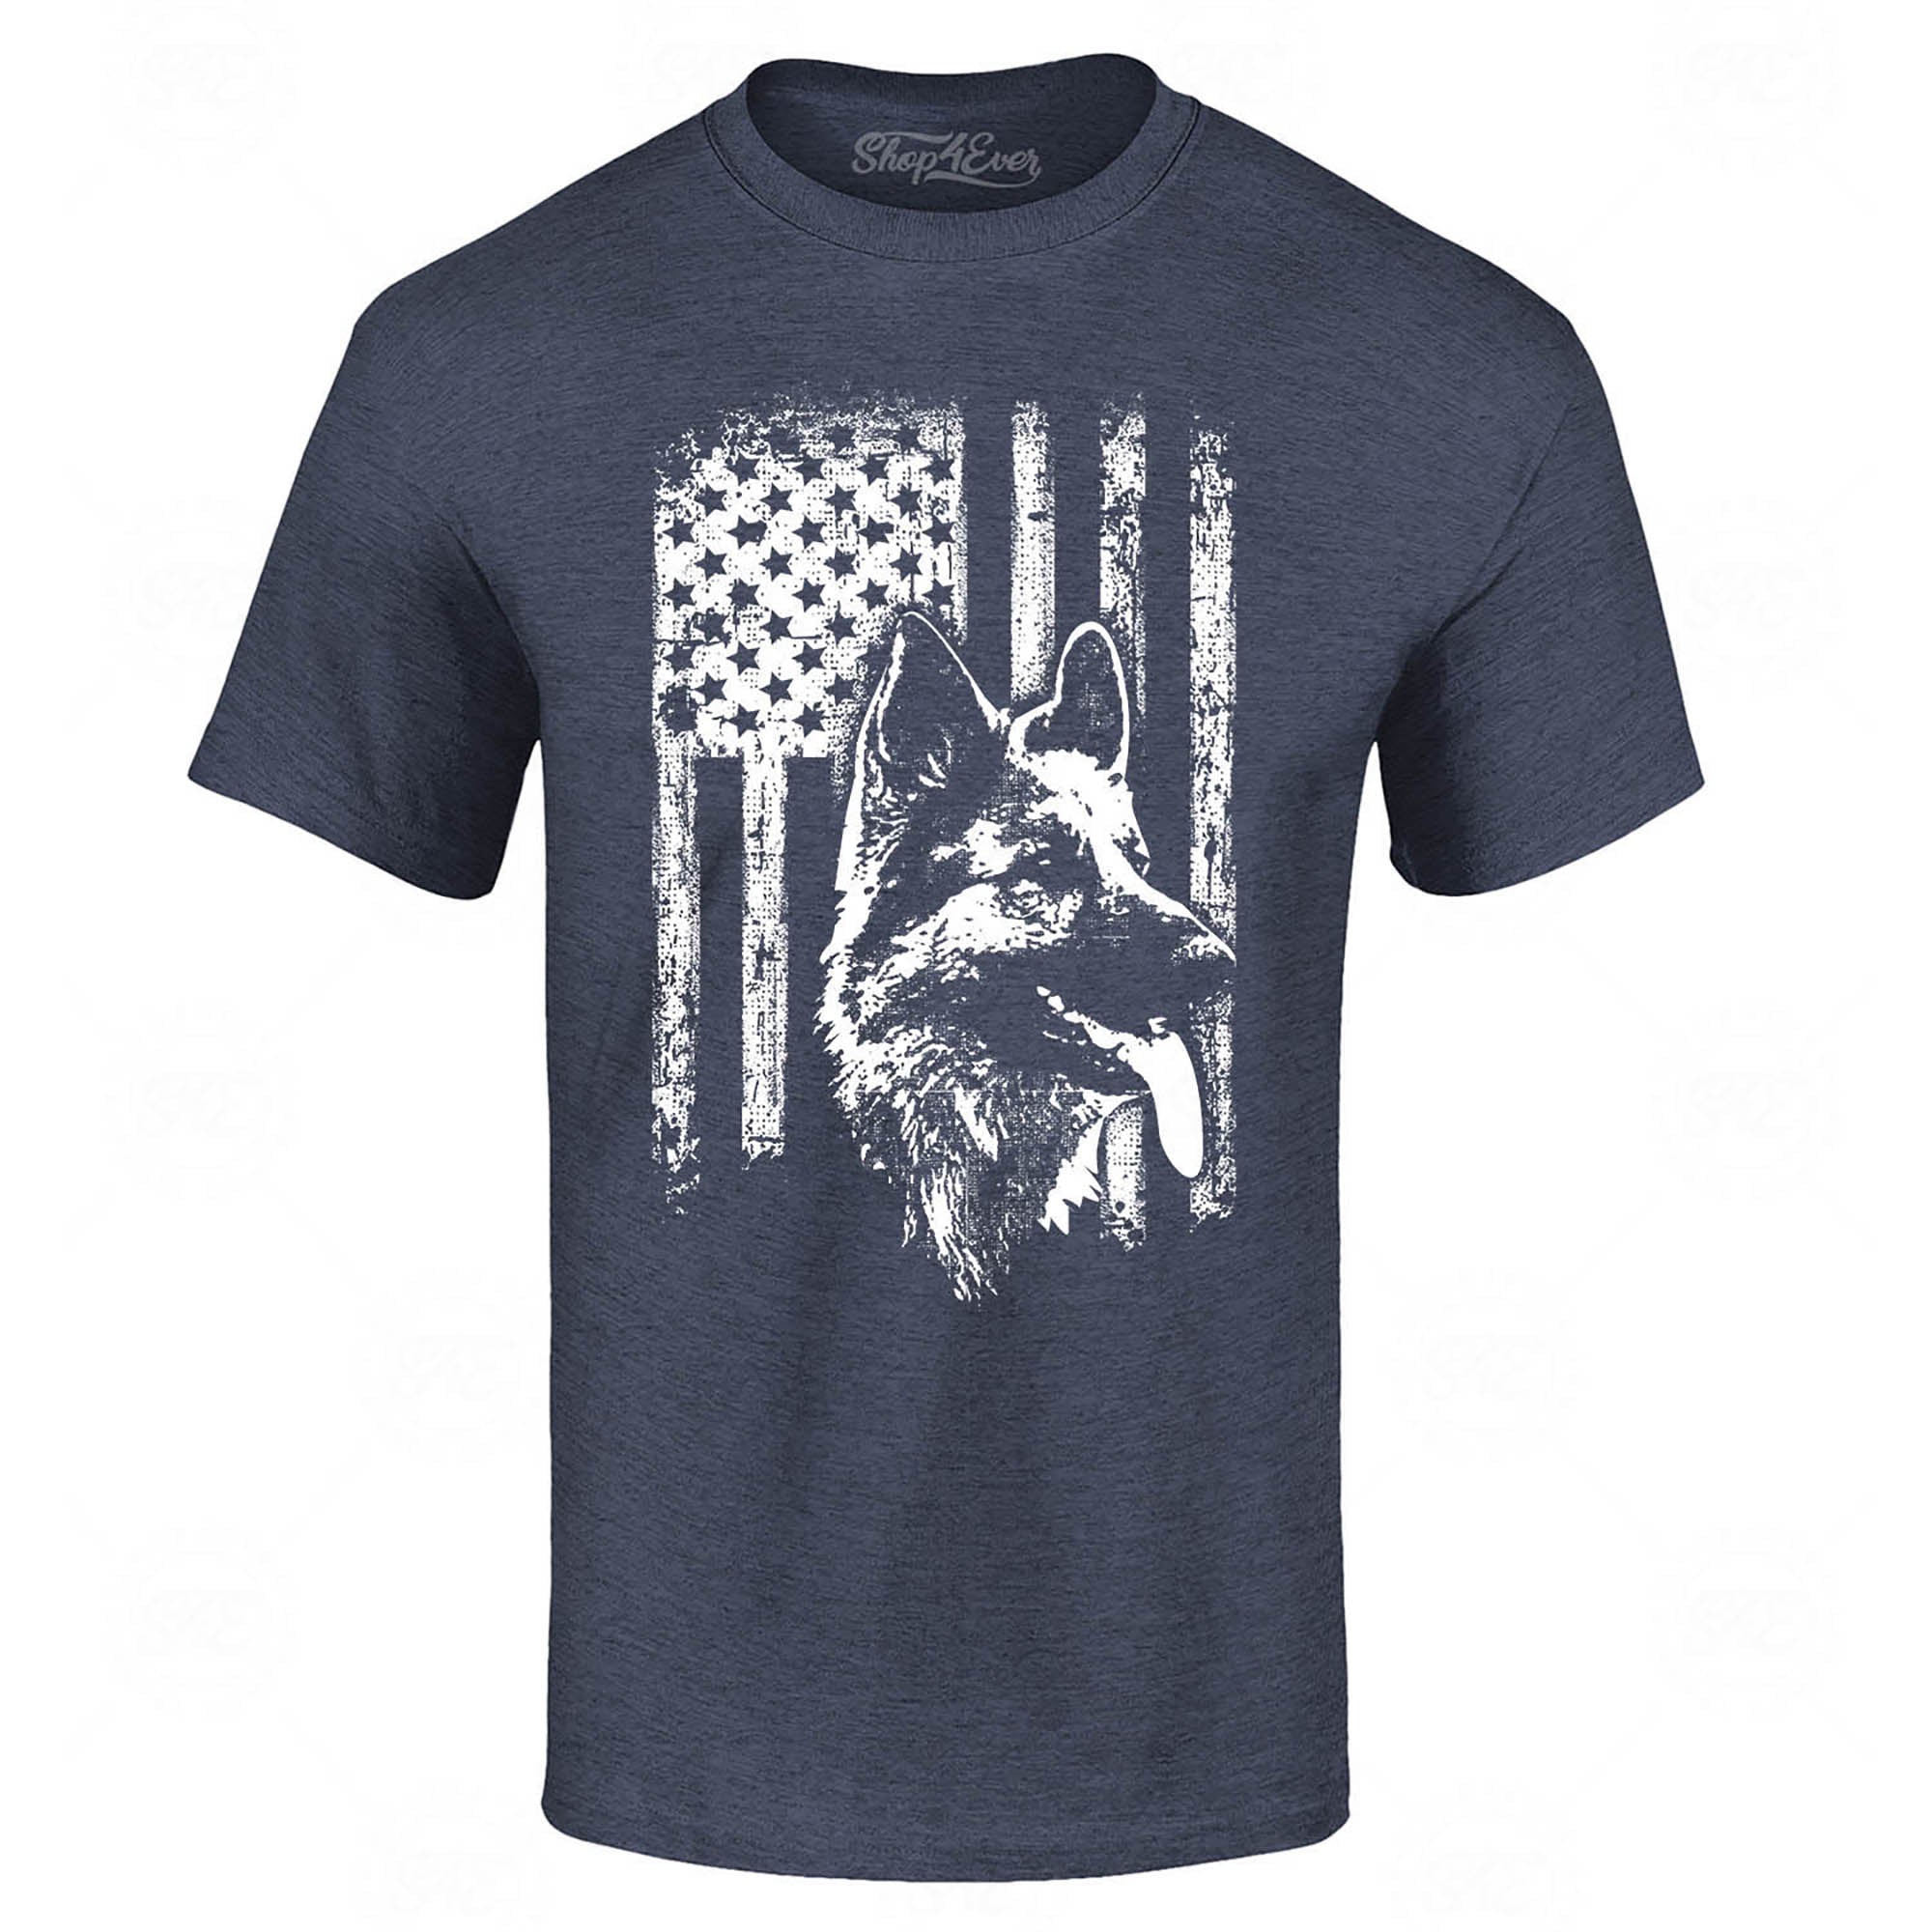 German Shepherd American Flag T-Shirt